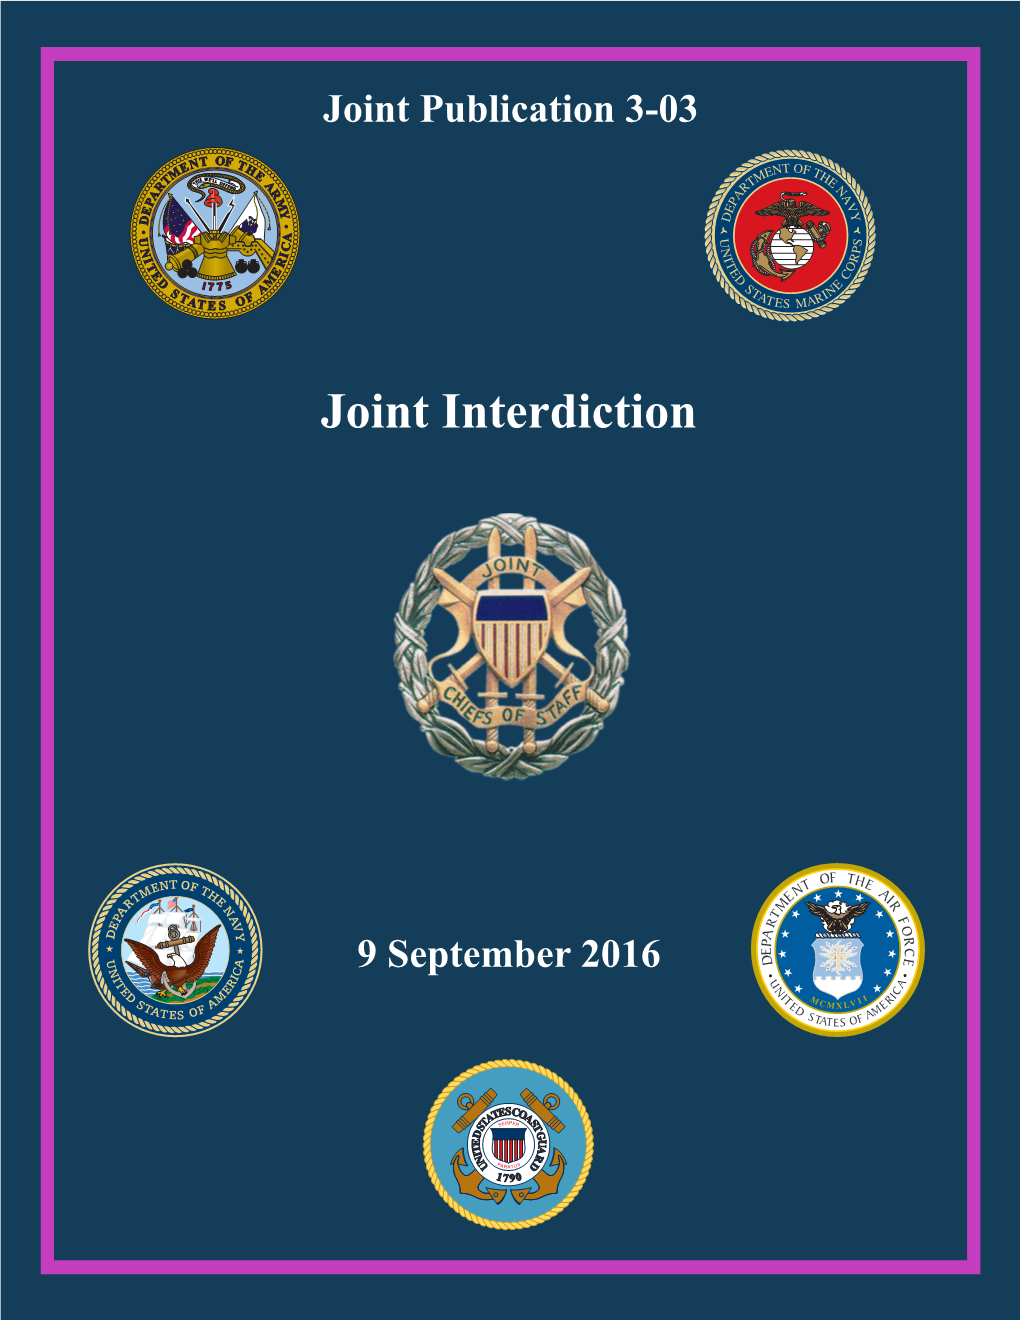 JP 3-03, Joint Interdiction, 14 October 2011